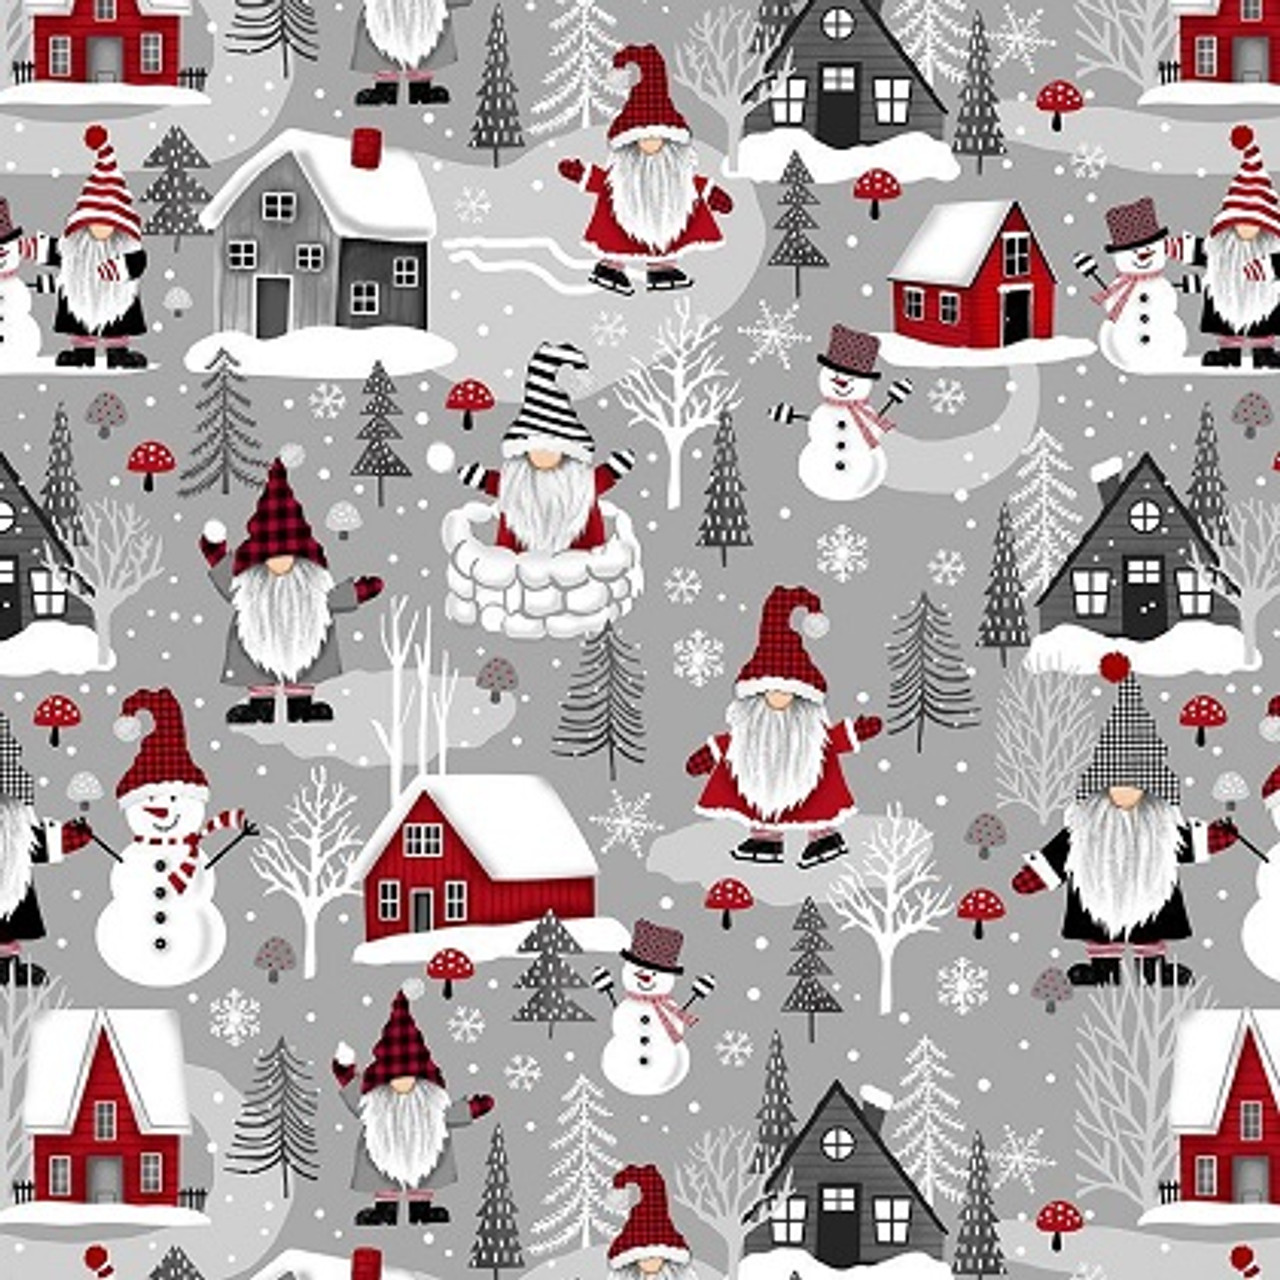 Christmas Horses fabric, cotton fabric by the yard, farm barn pretty snow,  country holiday decor festive, red cardinal